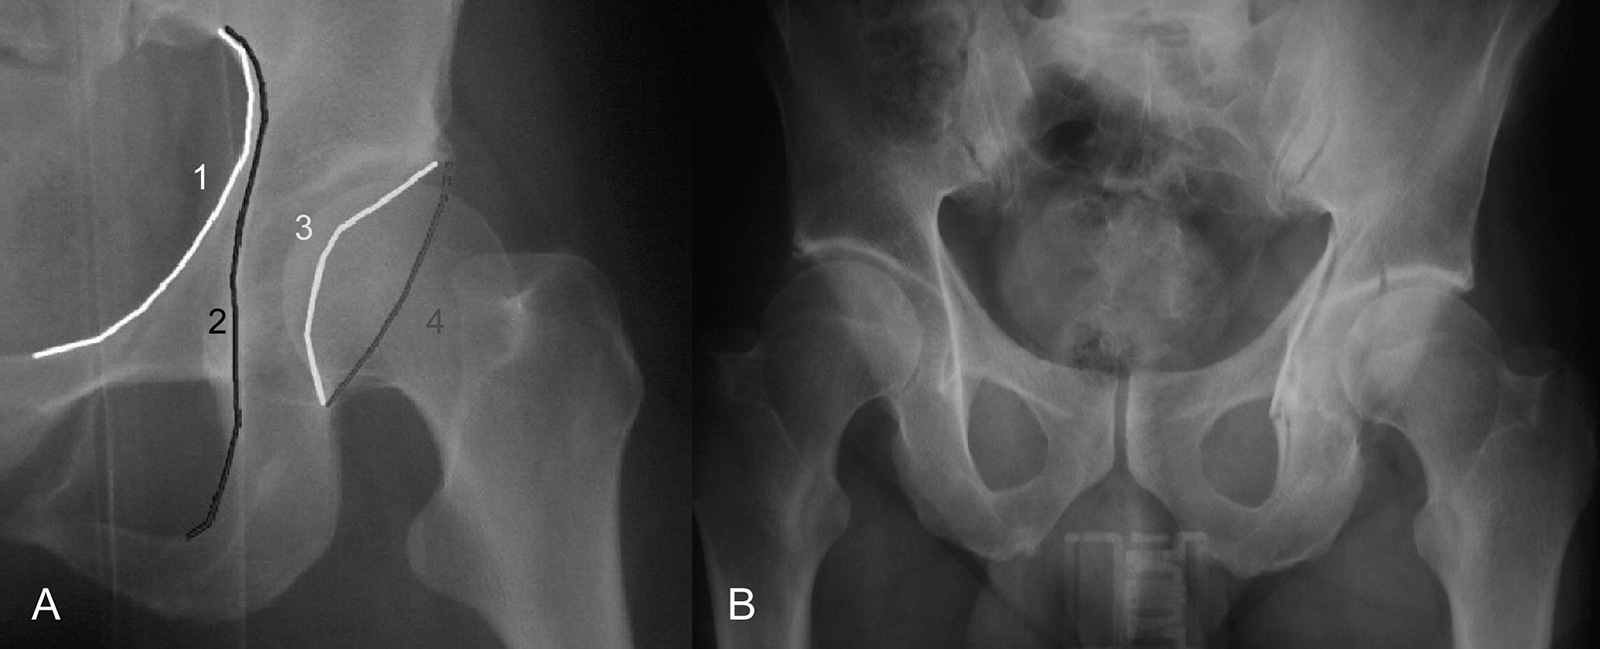 Abb. 3-18: Das knöcherne Acetabulum im Röntgenbild (A): Linea iliopectinea (1), ilio-ischiale Linie (2), vorderer Pfannenrand (3), hinterer Pfannenrand (4). Röntgenbild einer Acetabulumfraktur links (B)